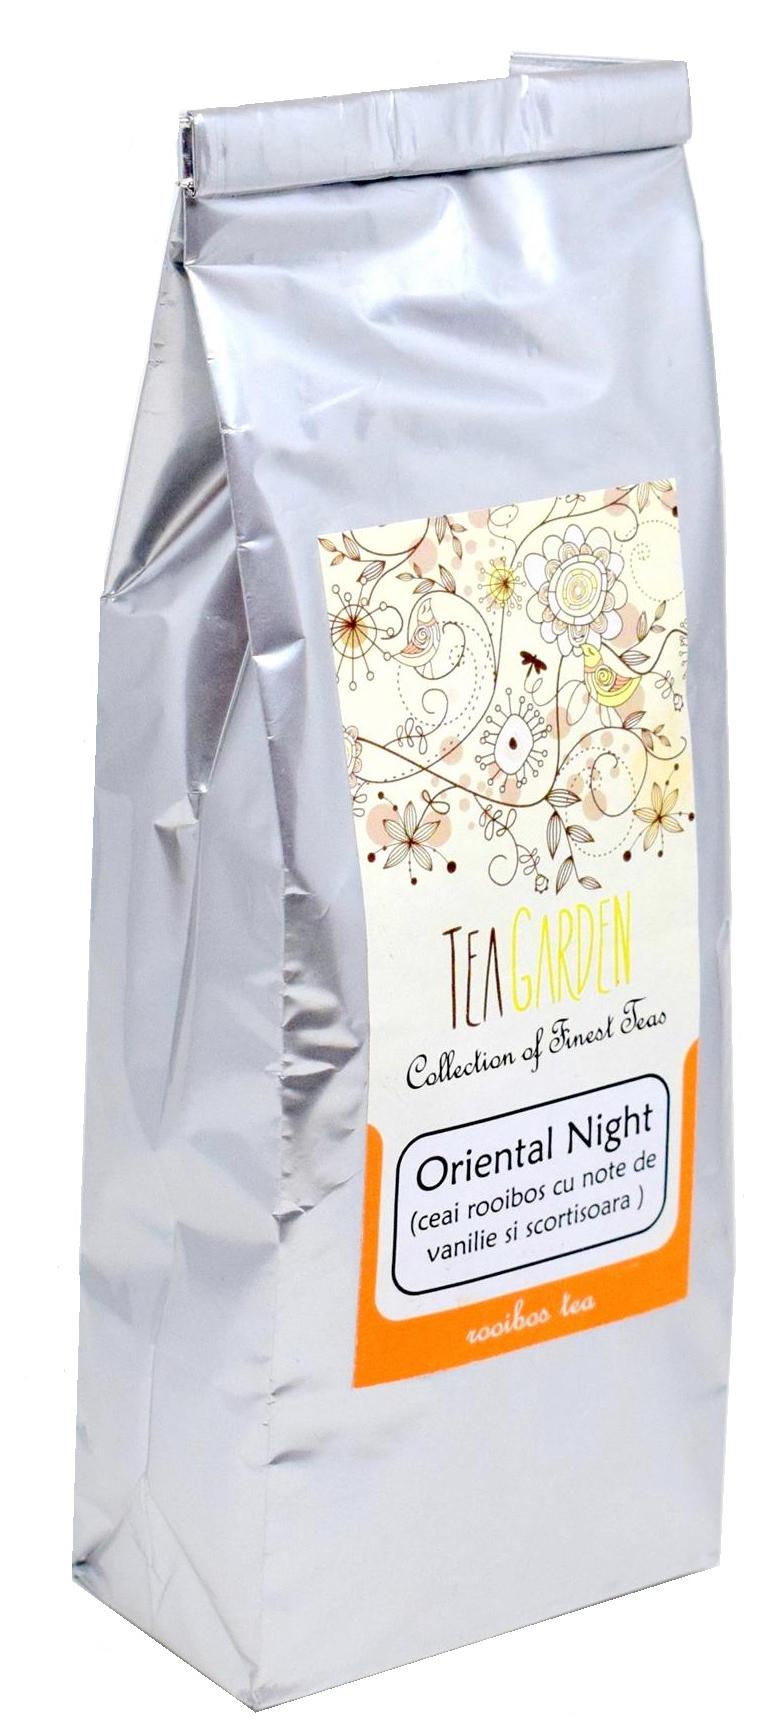 Ceai Oriental Night